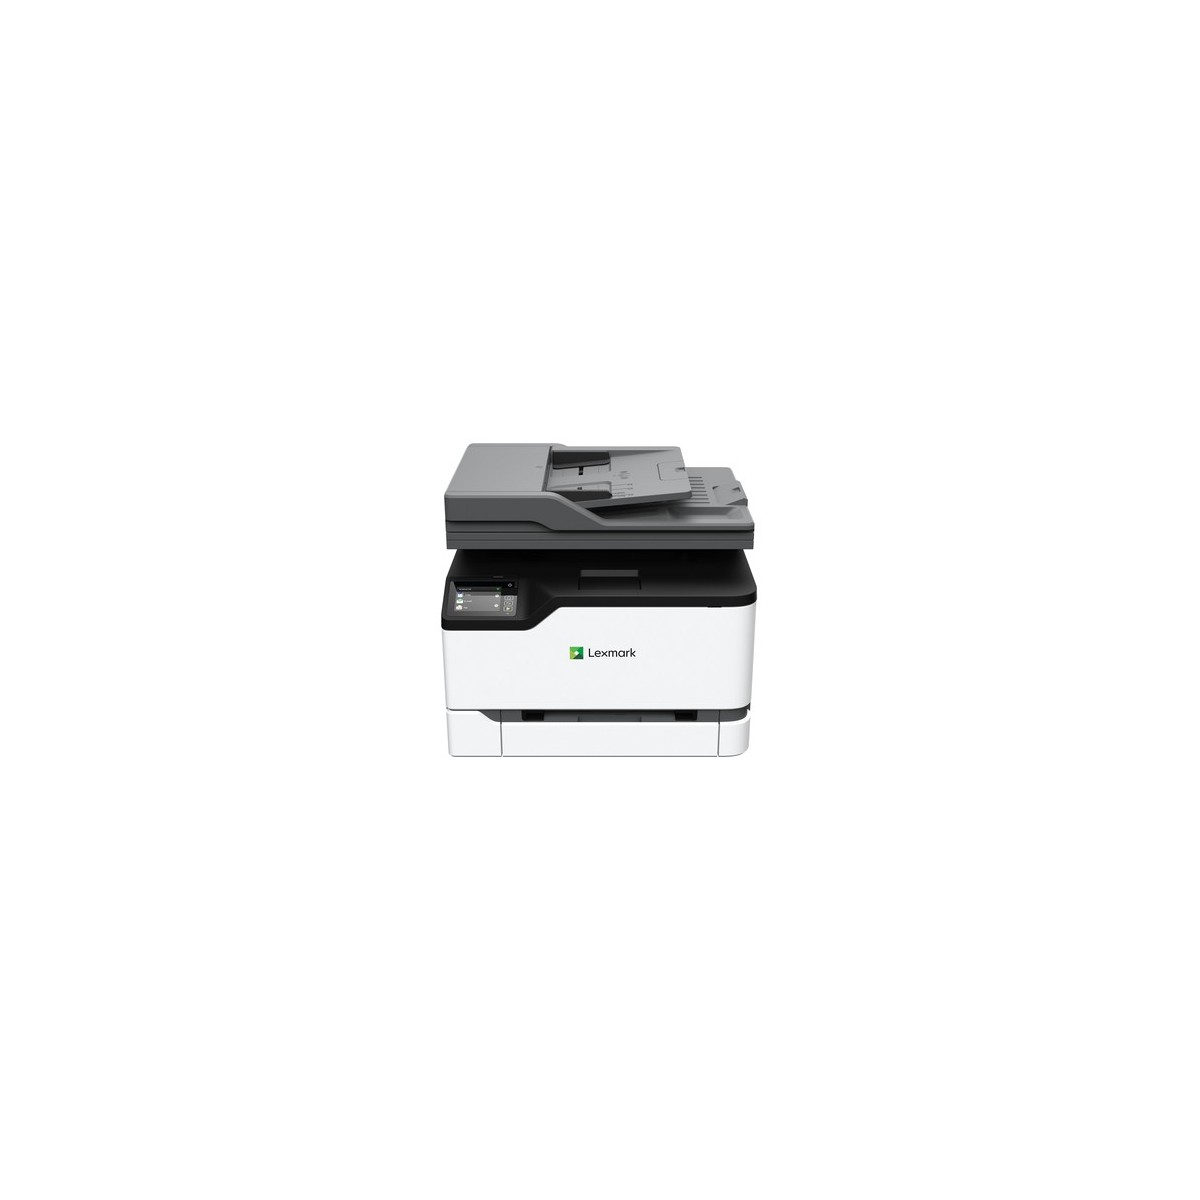 Lexmark MC3326i - Laser - Colour printing - 600 x 600 DPI - A4 - Direct printing - Black - White